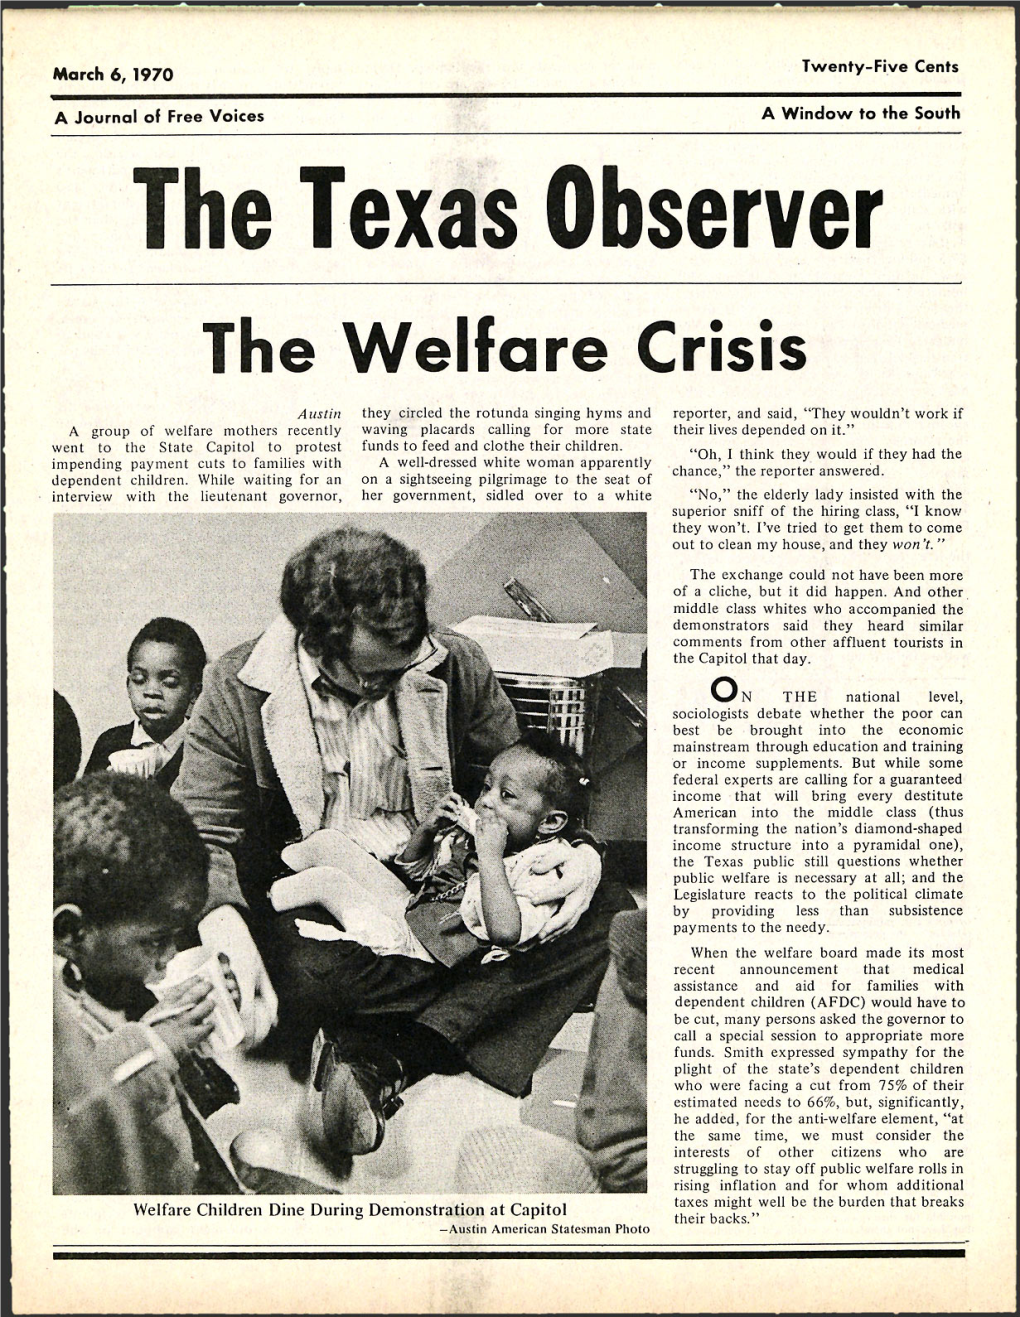 The Texas Observer the Welfare Crisis